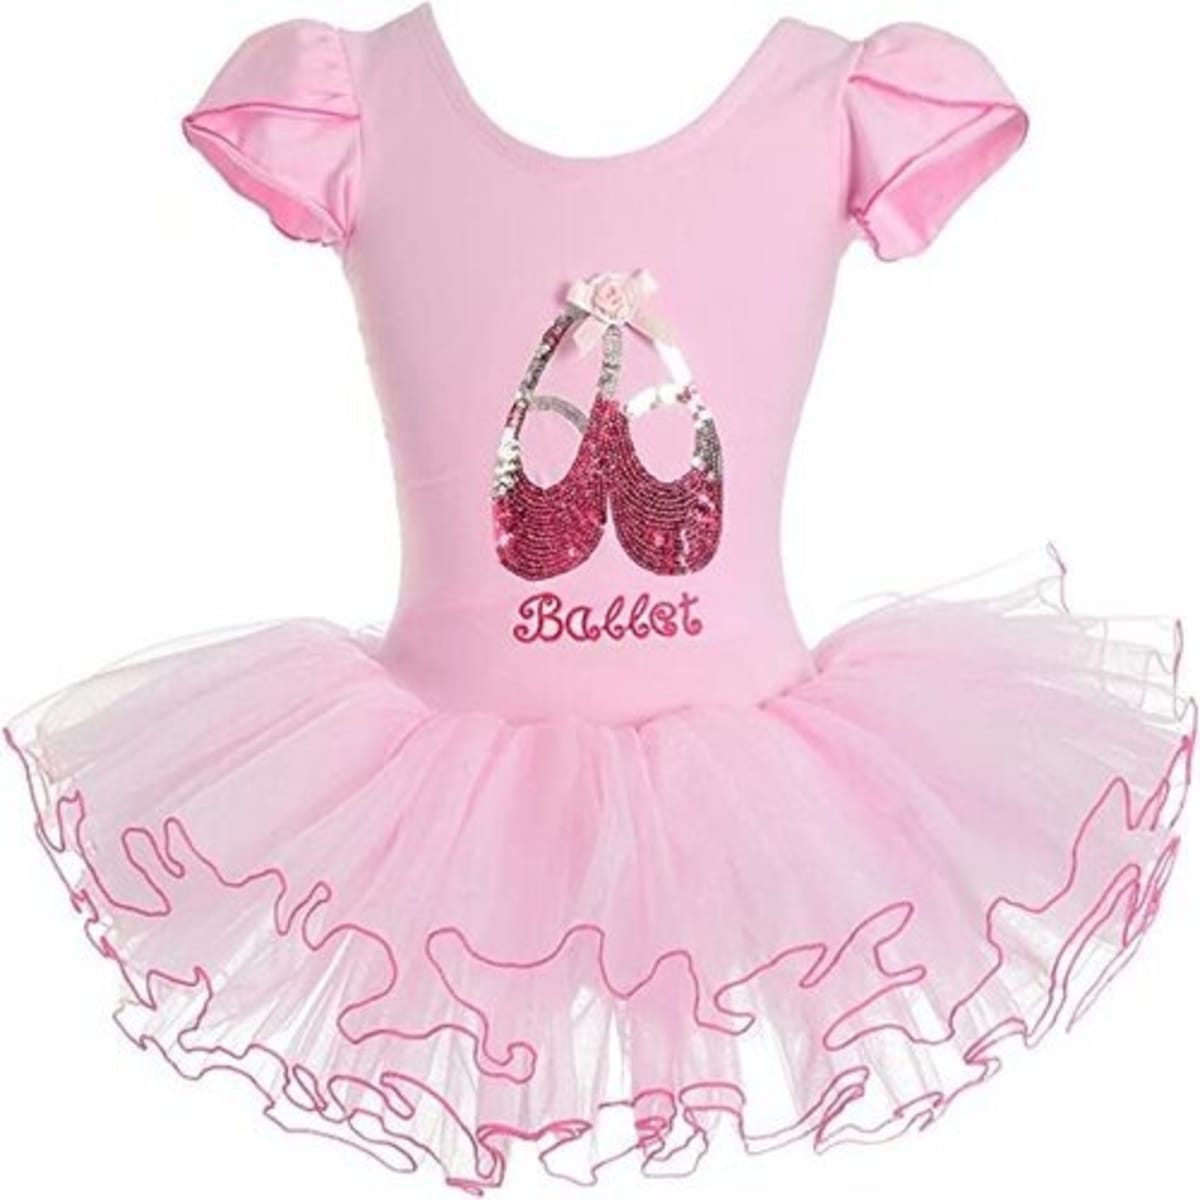 Ballet Hot Pink Girls Tutu Skirt Dance Costume Ships Fast